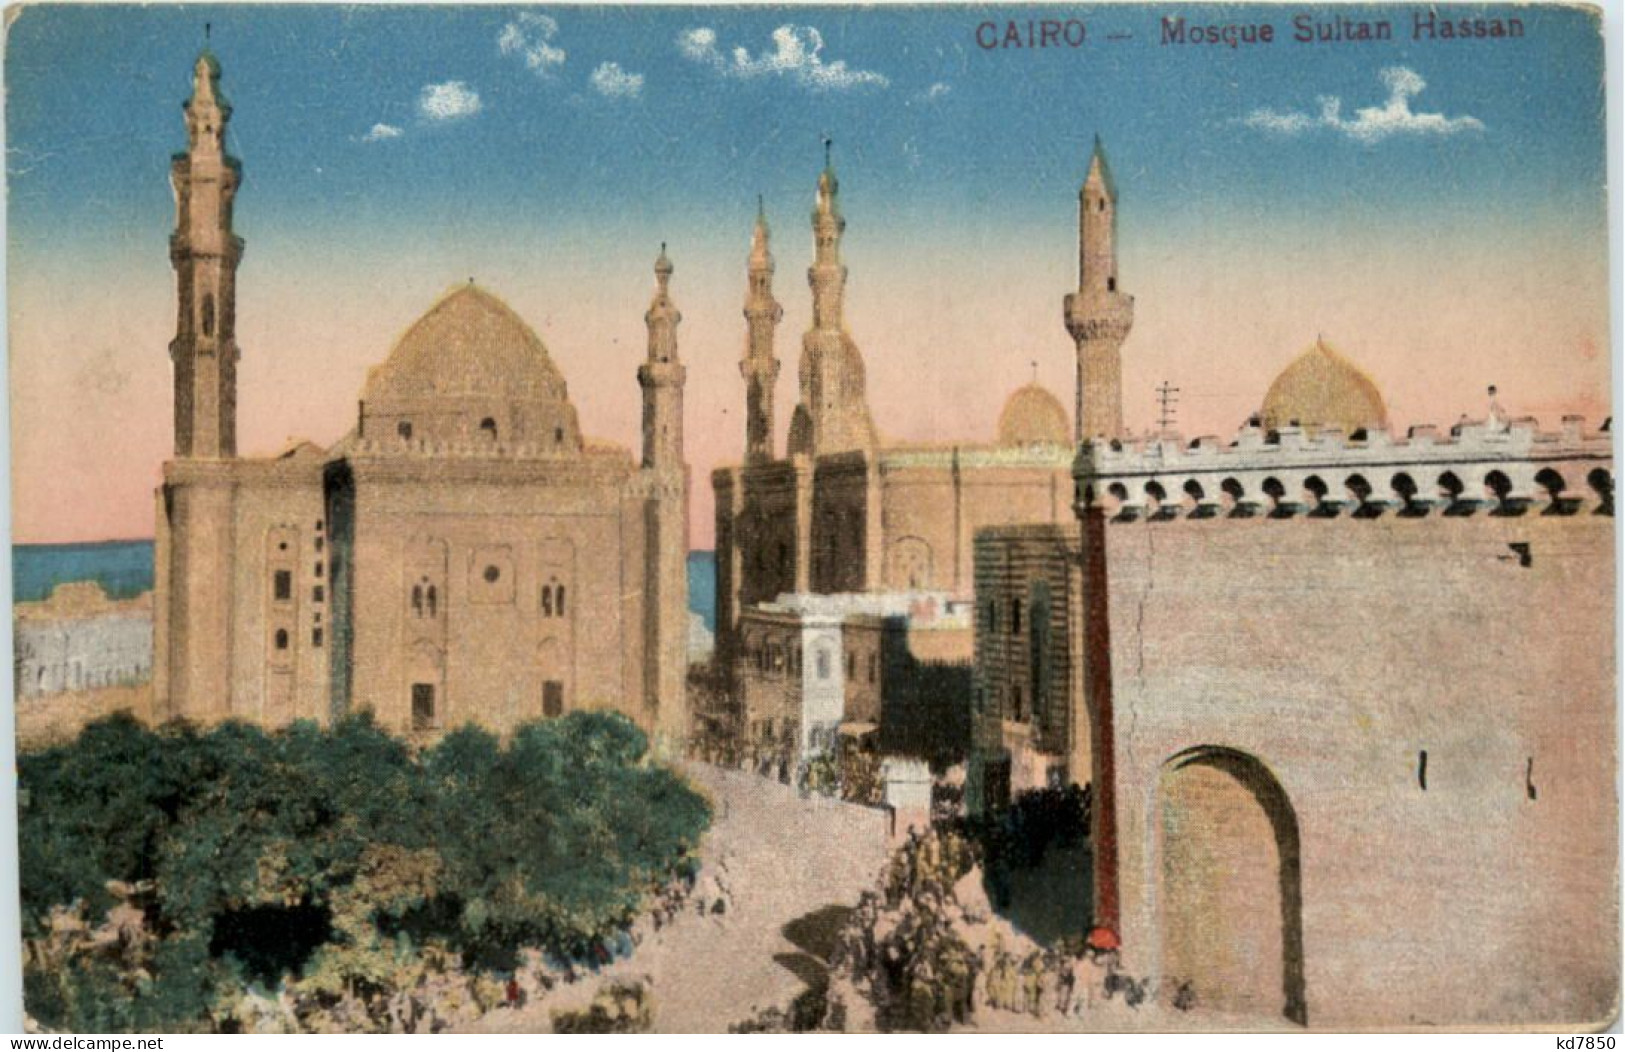 Cairo - Mosque Sultan Hassan - Alexandrie